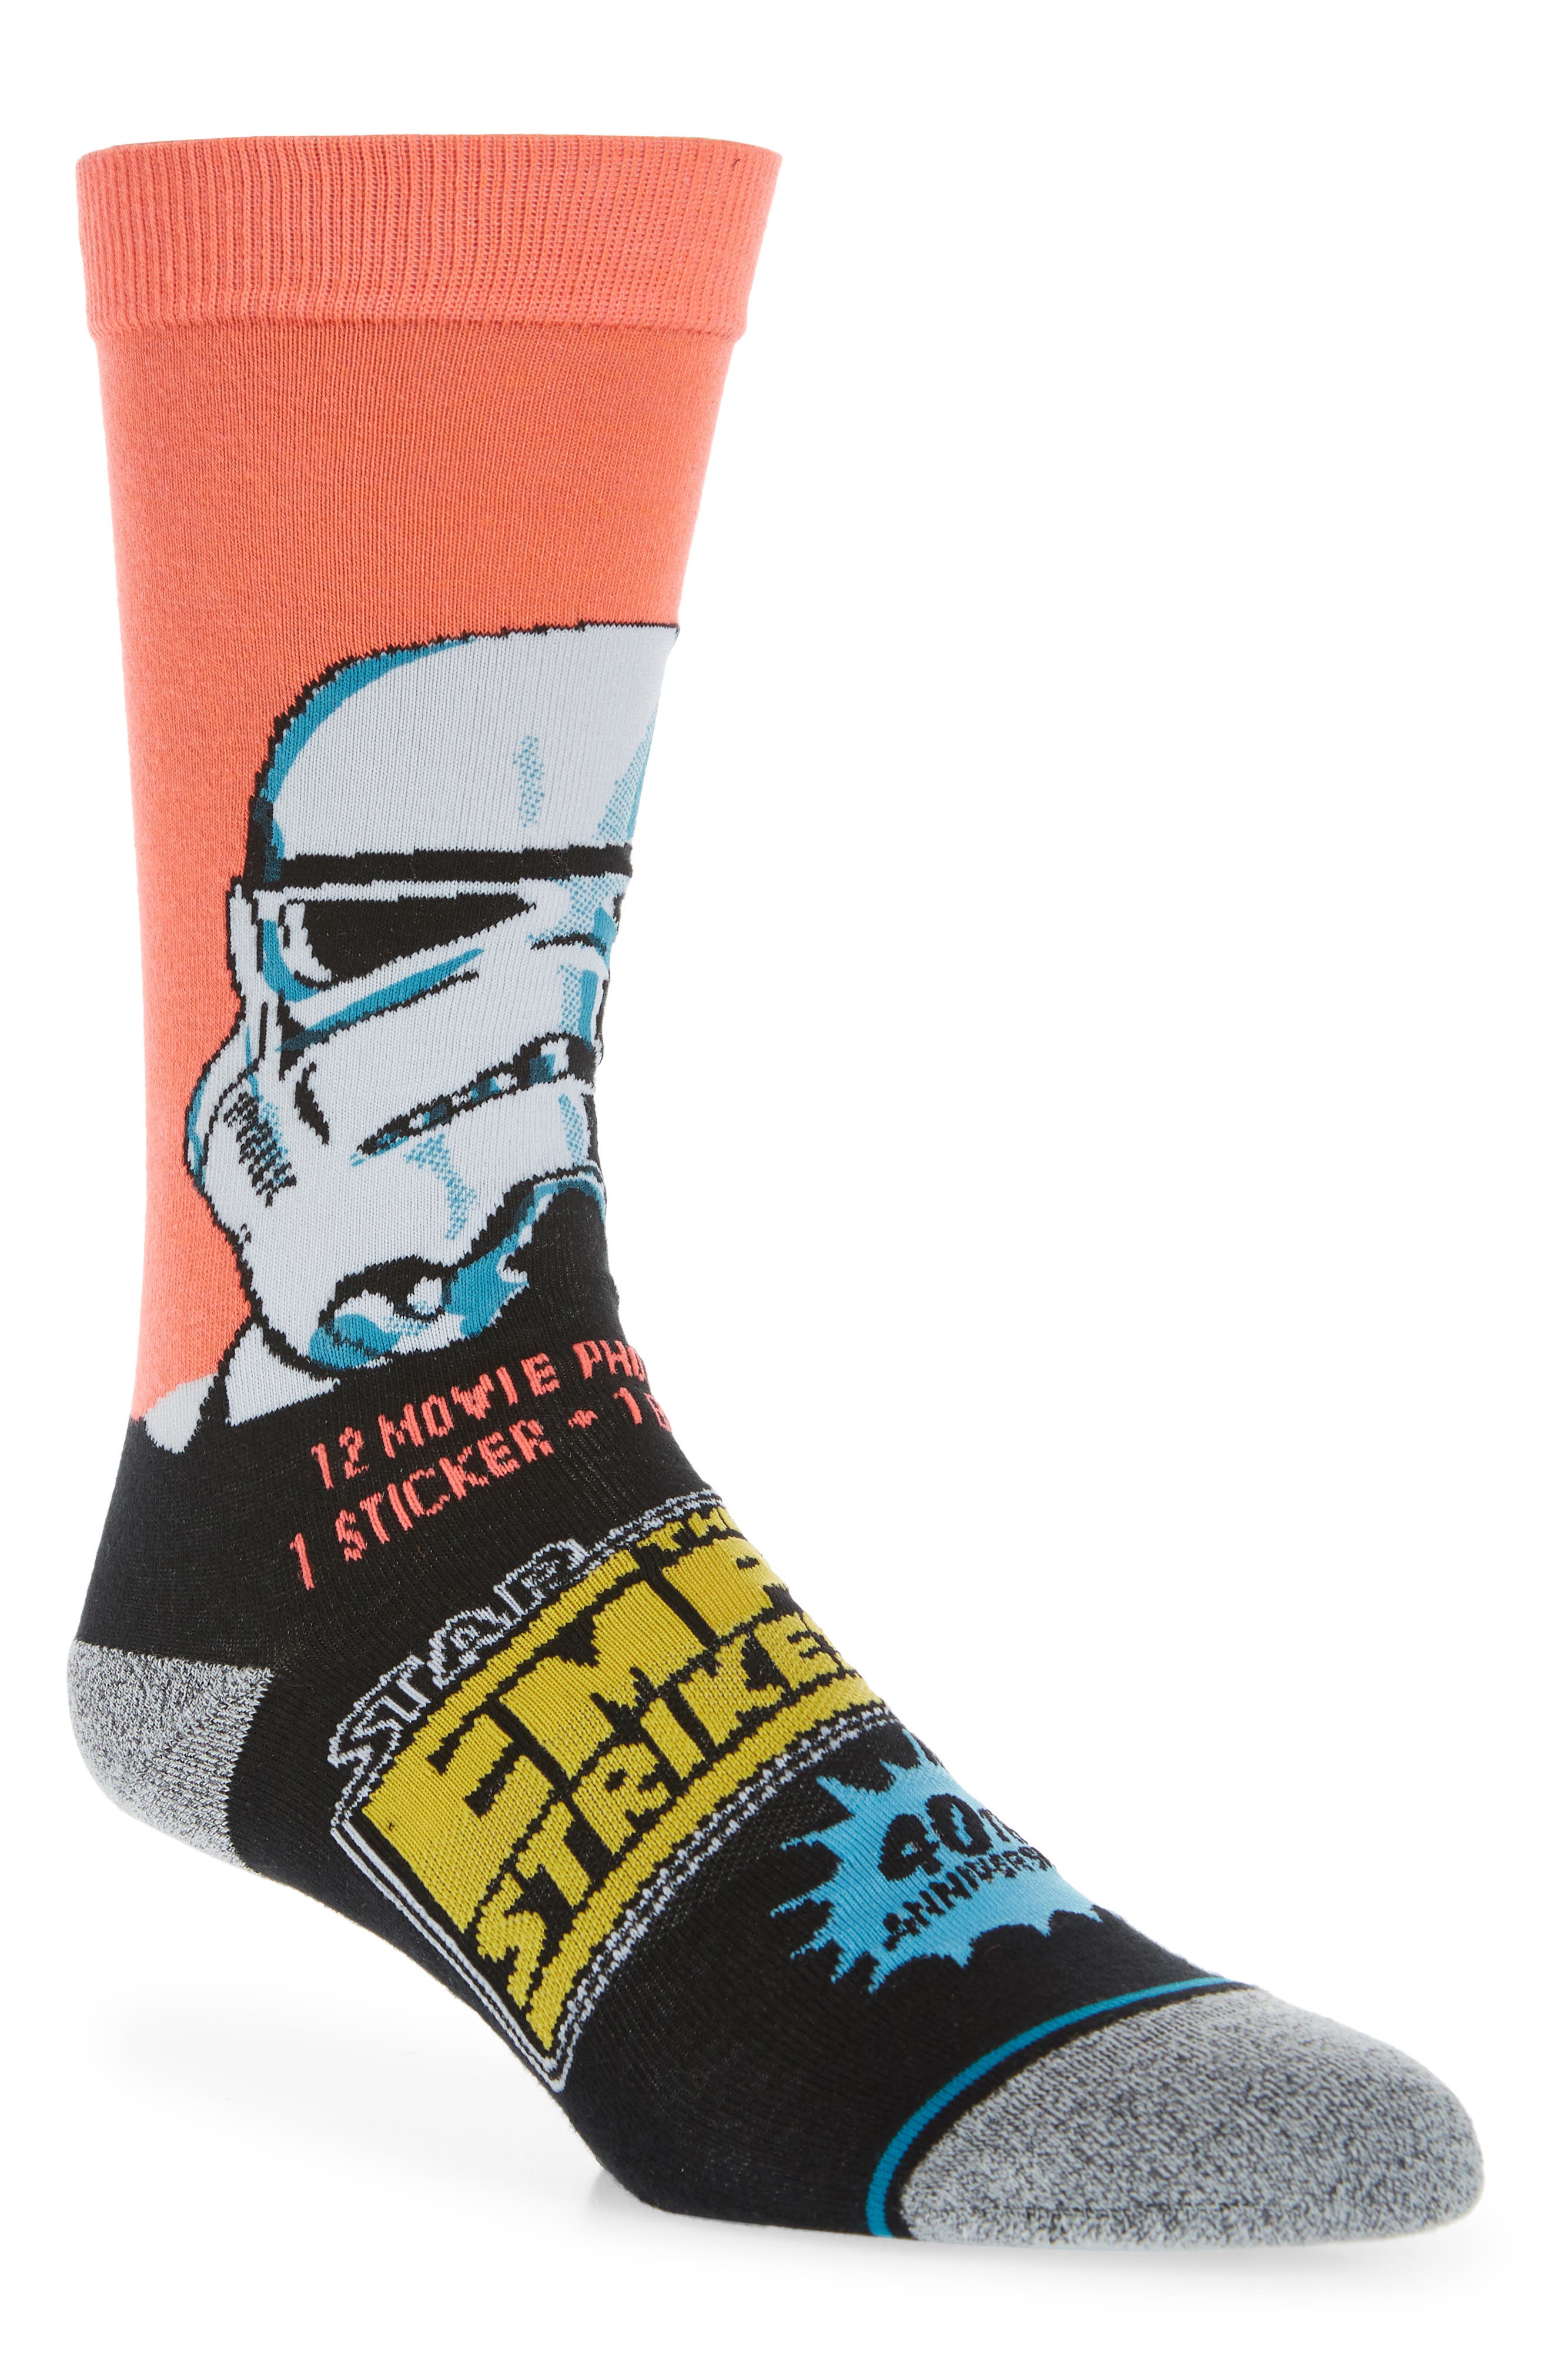 Star Wars Empire Strikes Back Crew Socks Lootcrate Exclusive C5 